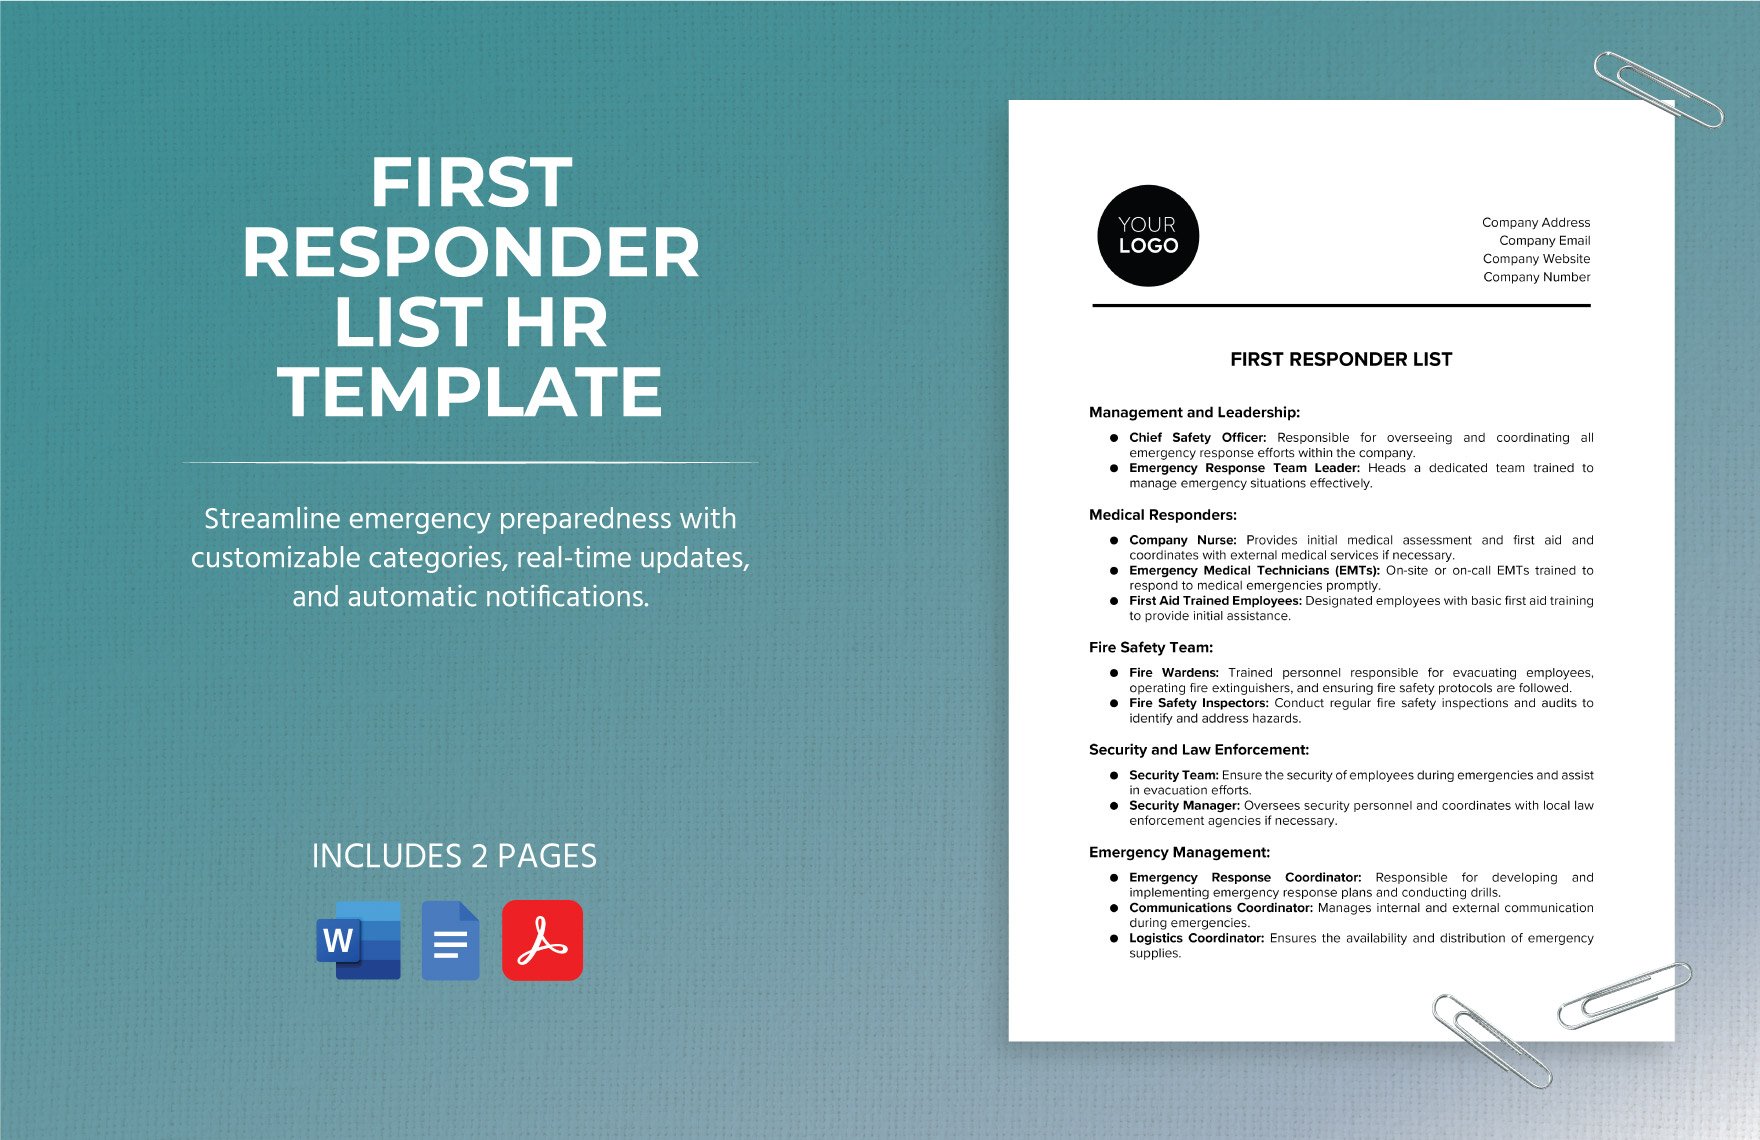 First Responder List HR Template